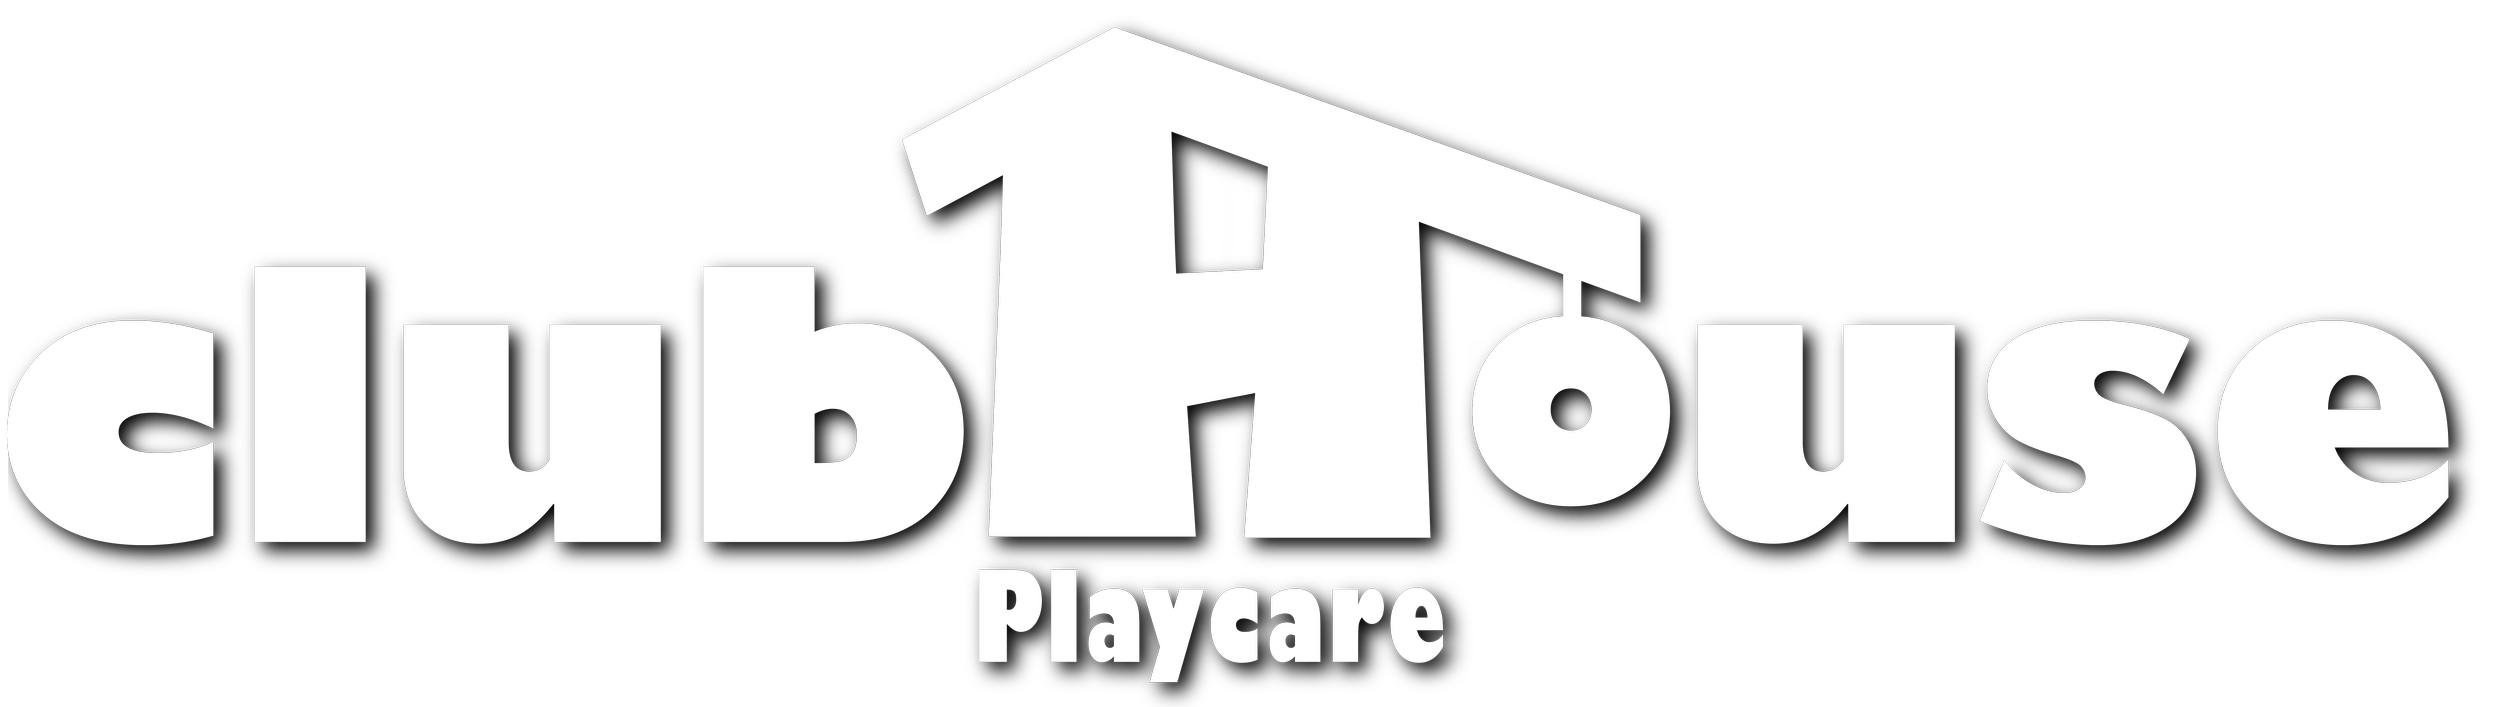 Playcare - Playcare